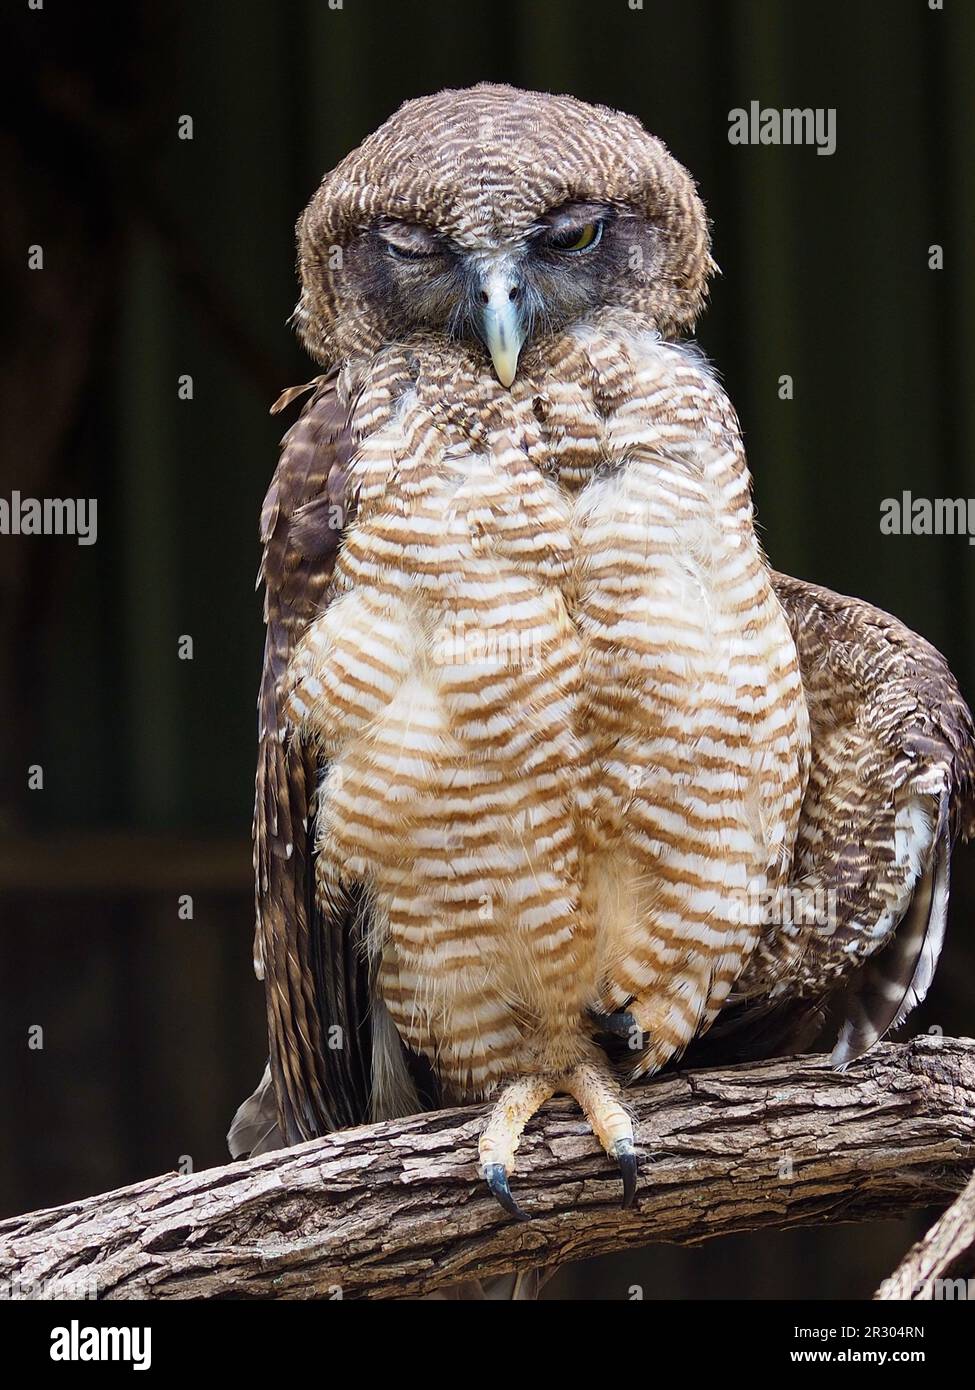 Wonderful drowsy Rufous Owl with distinctive plumage. Stock Photo